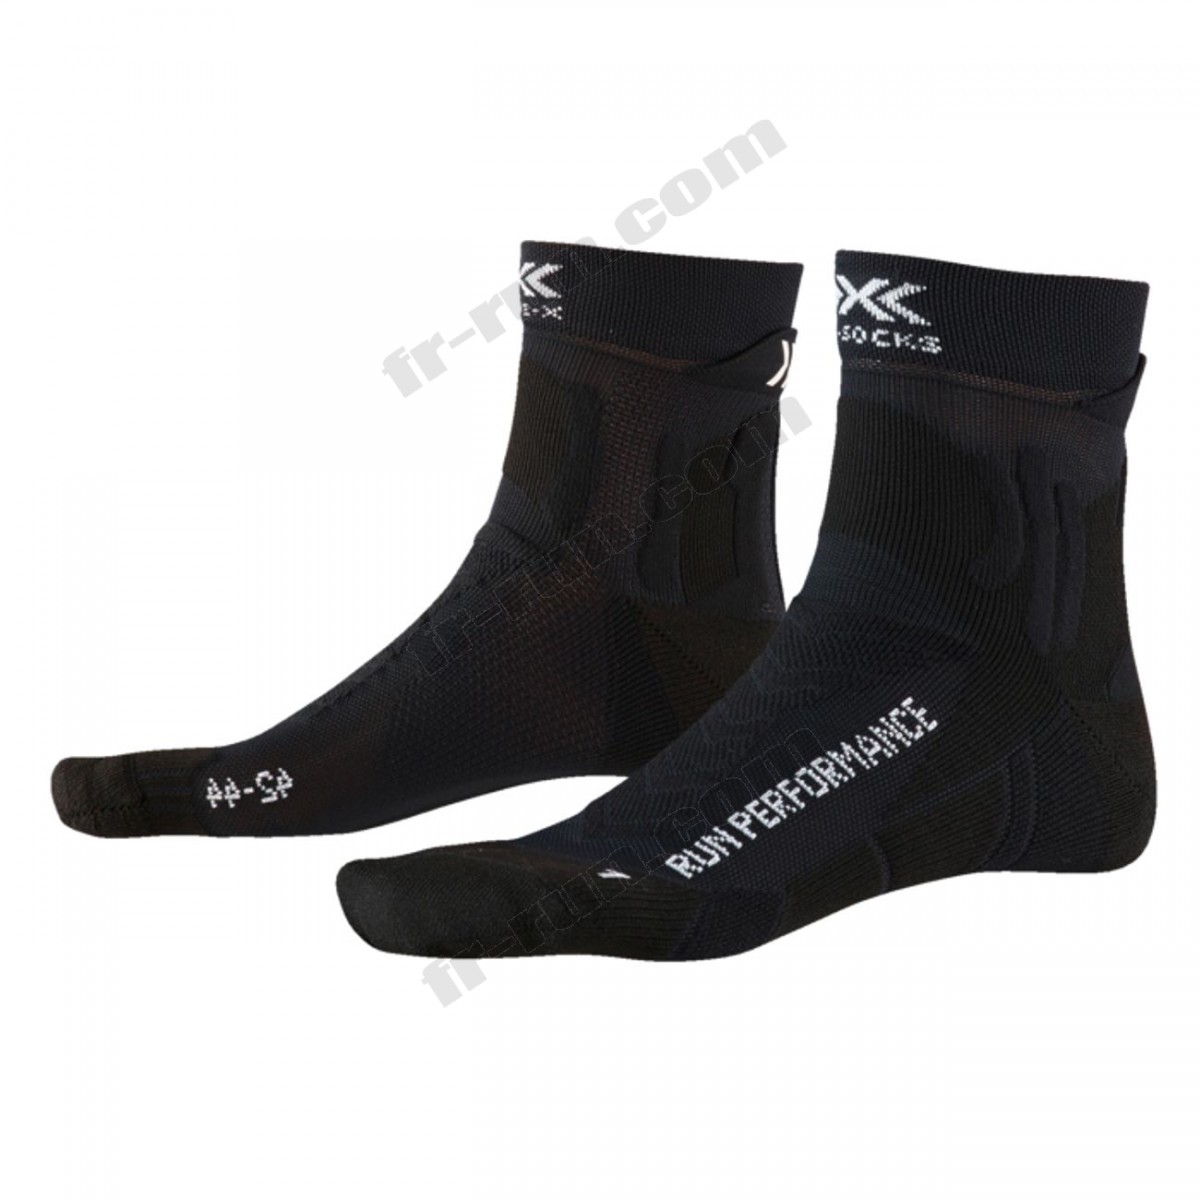 X-Socks/CHAUSSETTES running mixte X-SOCKS RUN PERFORMANCE ◇◇◇ Pas Cher Du Tout - -0